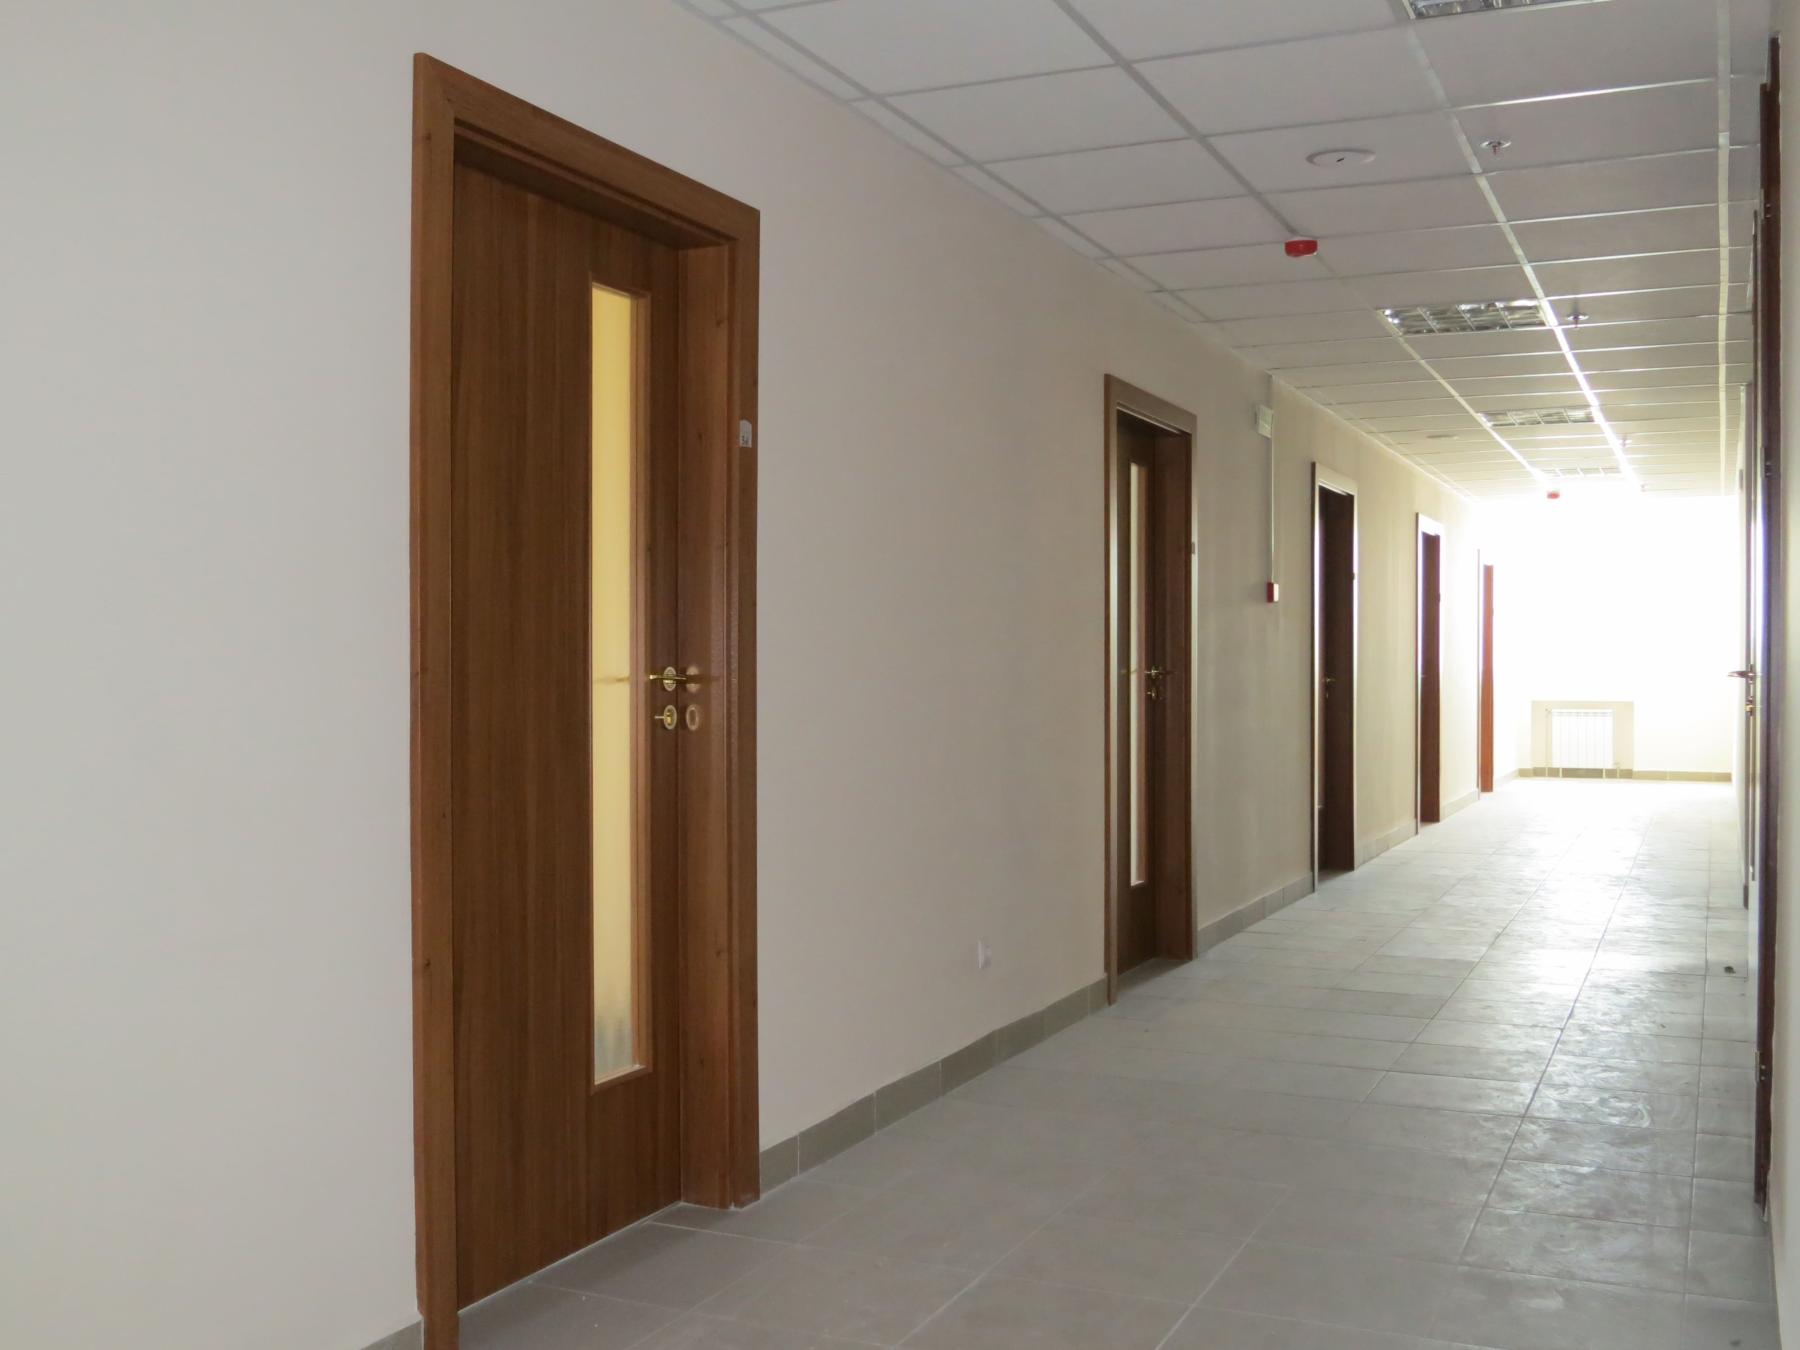 Двери Benefit в коридоре бизнес-центра "Ленинград"